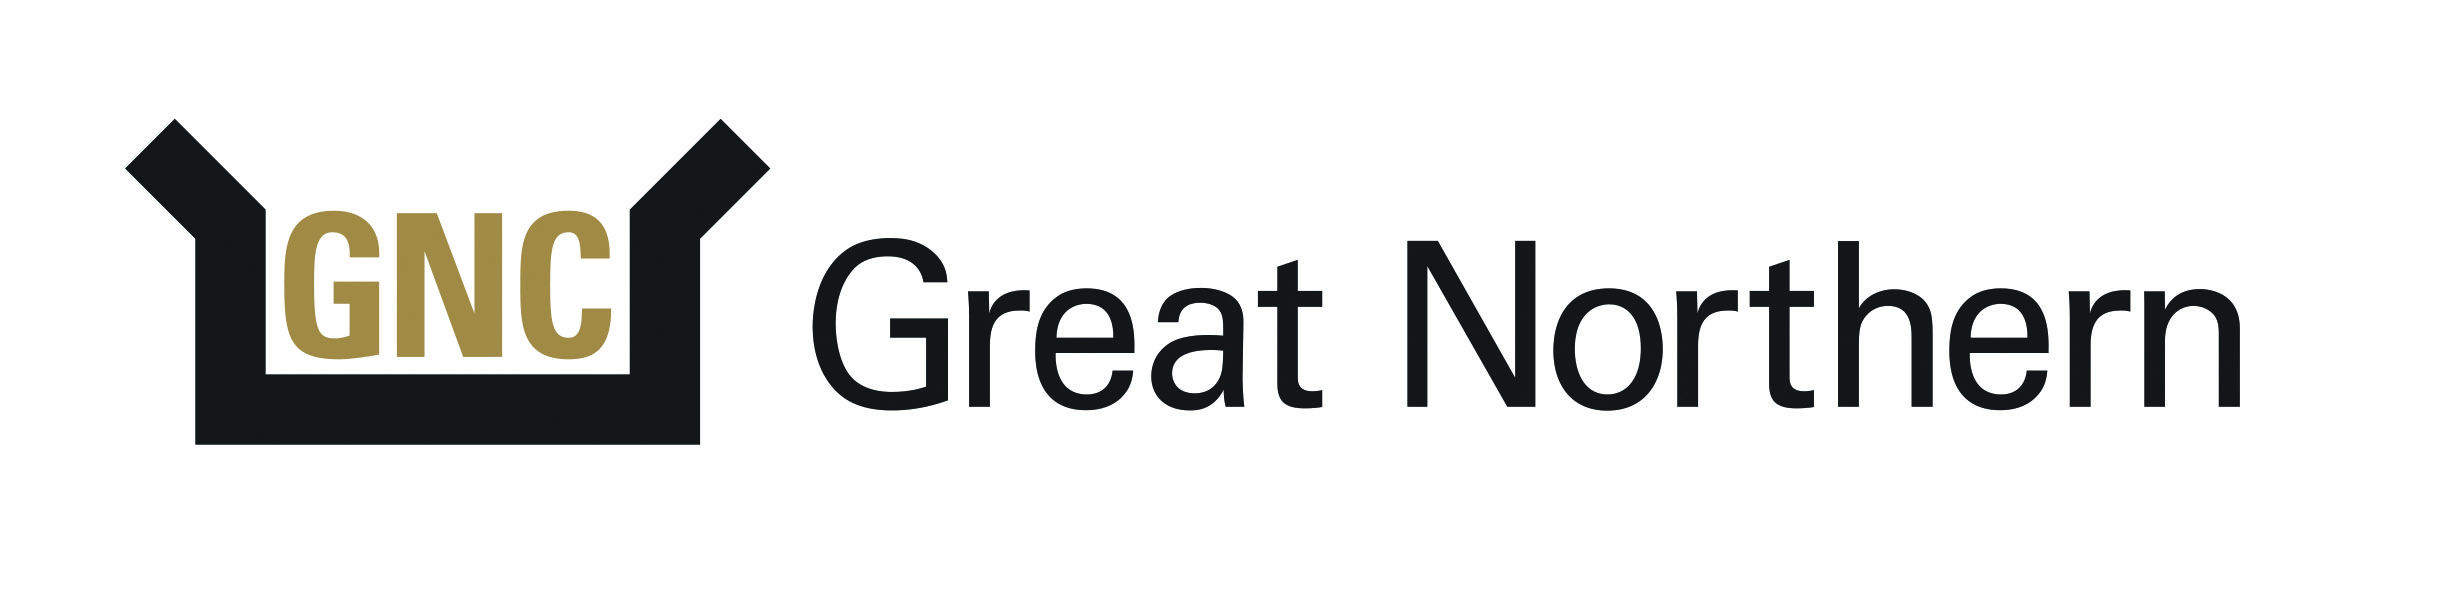 Great Northern Corporation Logo.jpg